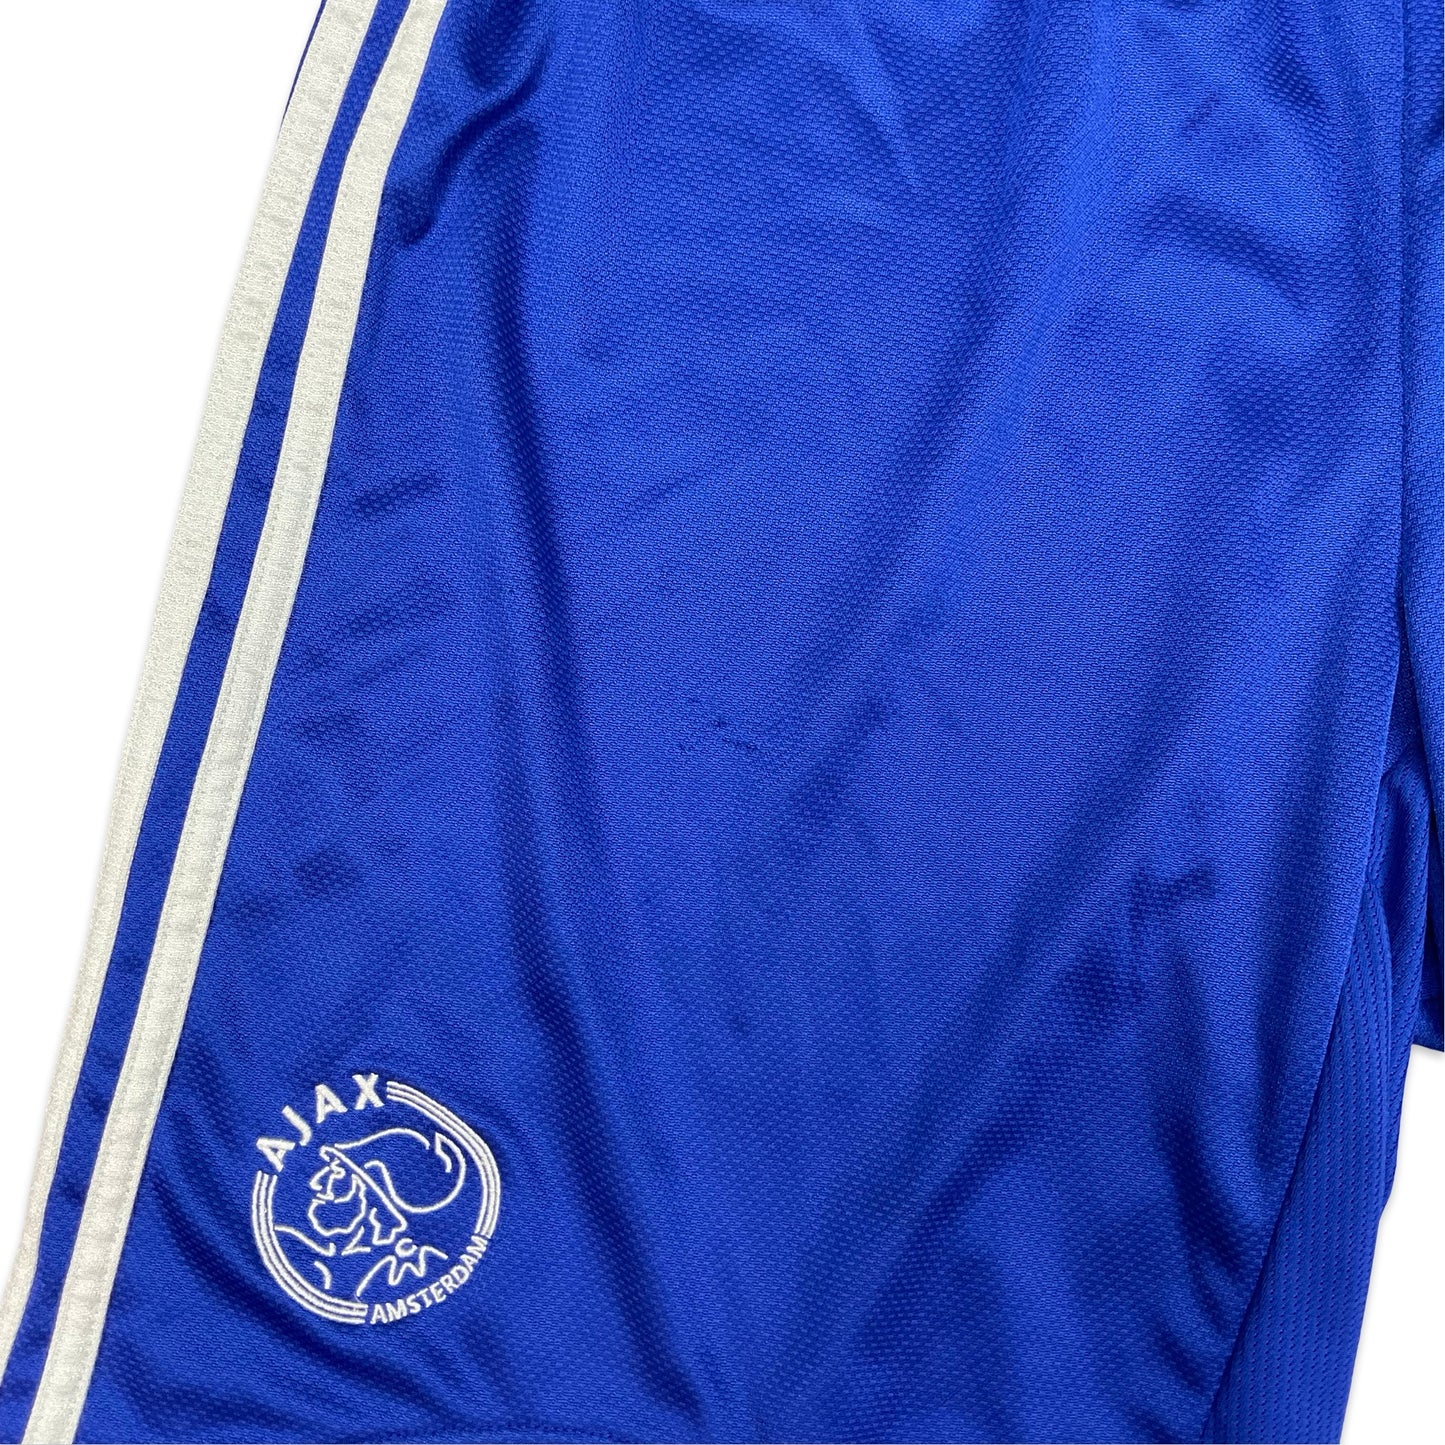 2007/08 Adidas Blue & White Ajax Football Shorts XL XXL